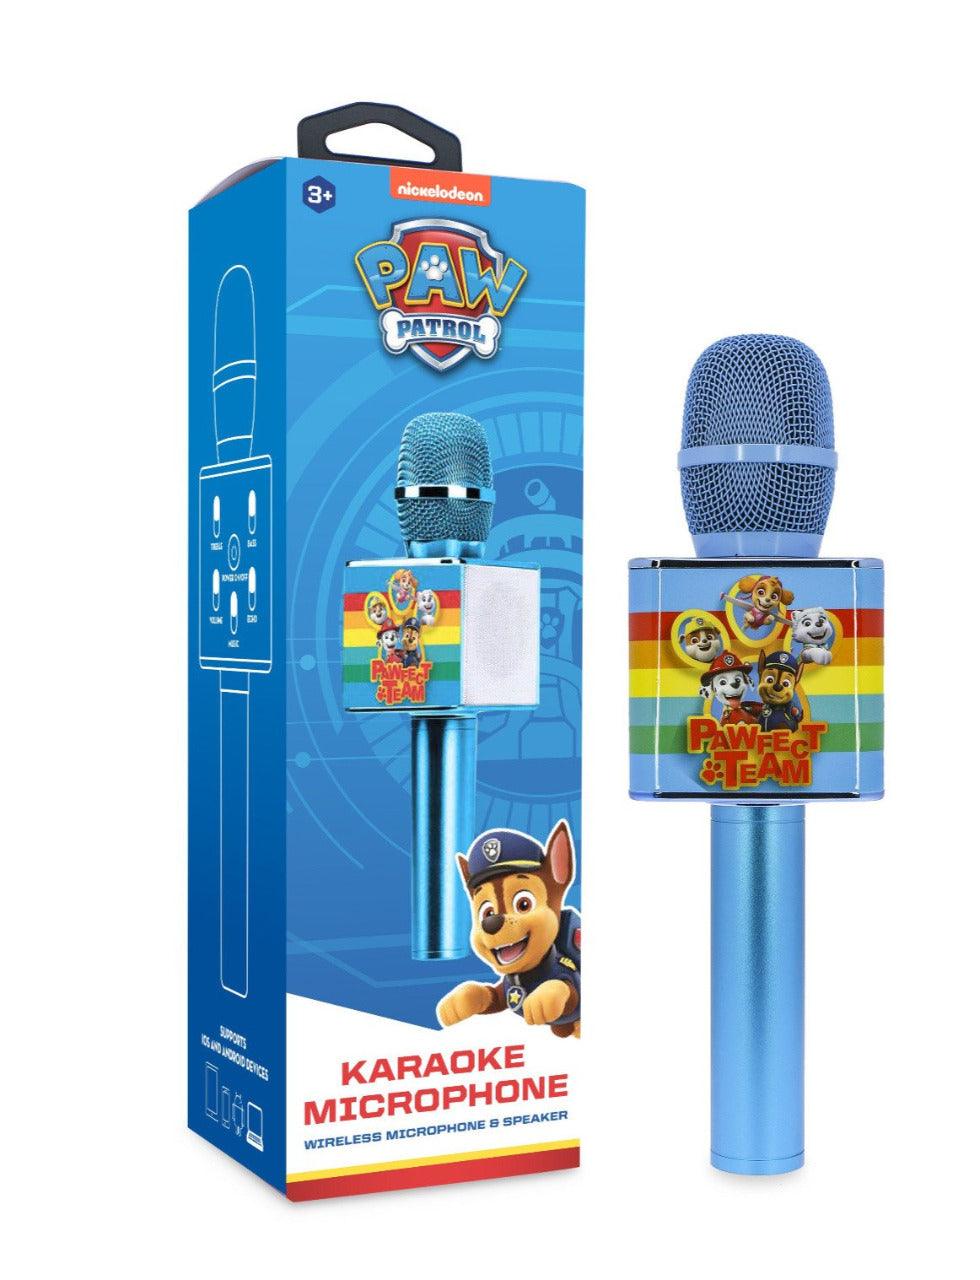 PAW Patrol Wireless Karaoke Microphone Blue - childrensheadphones.co.uk